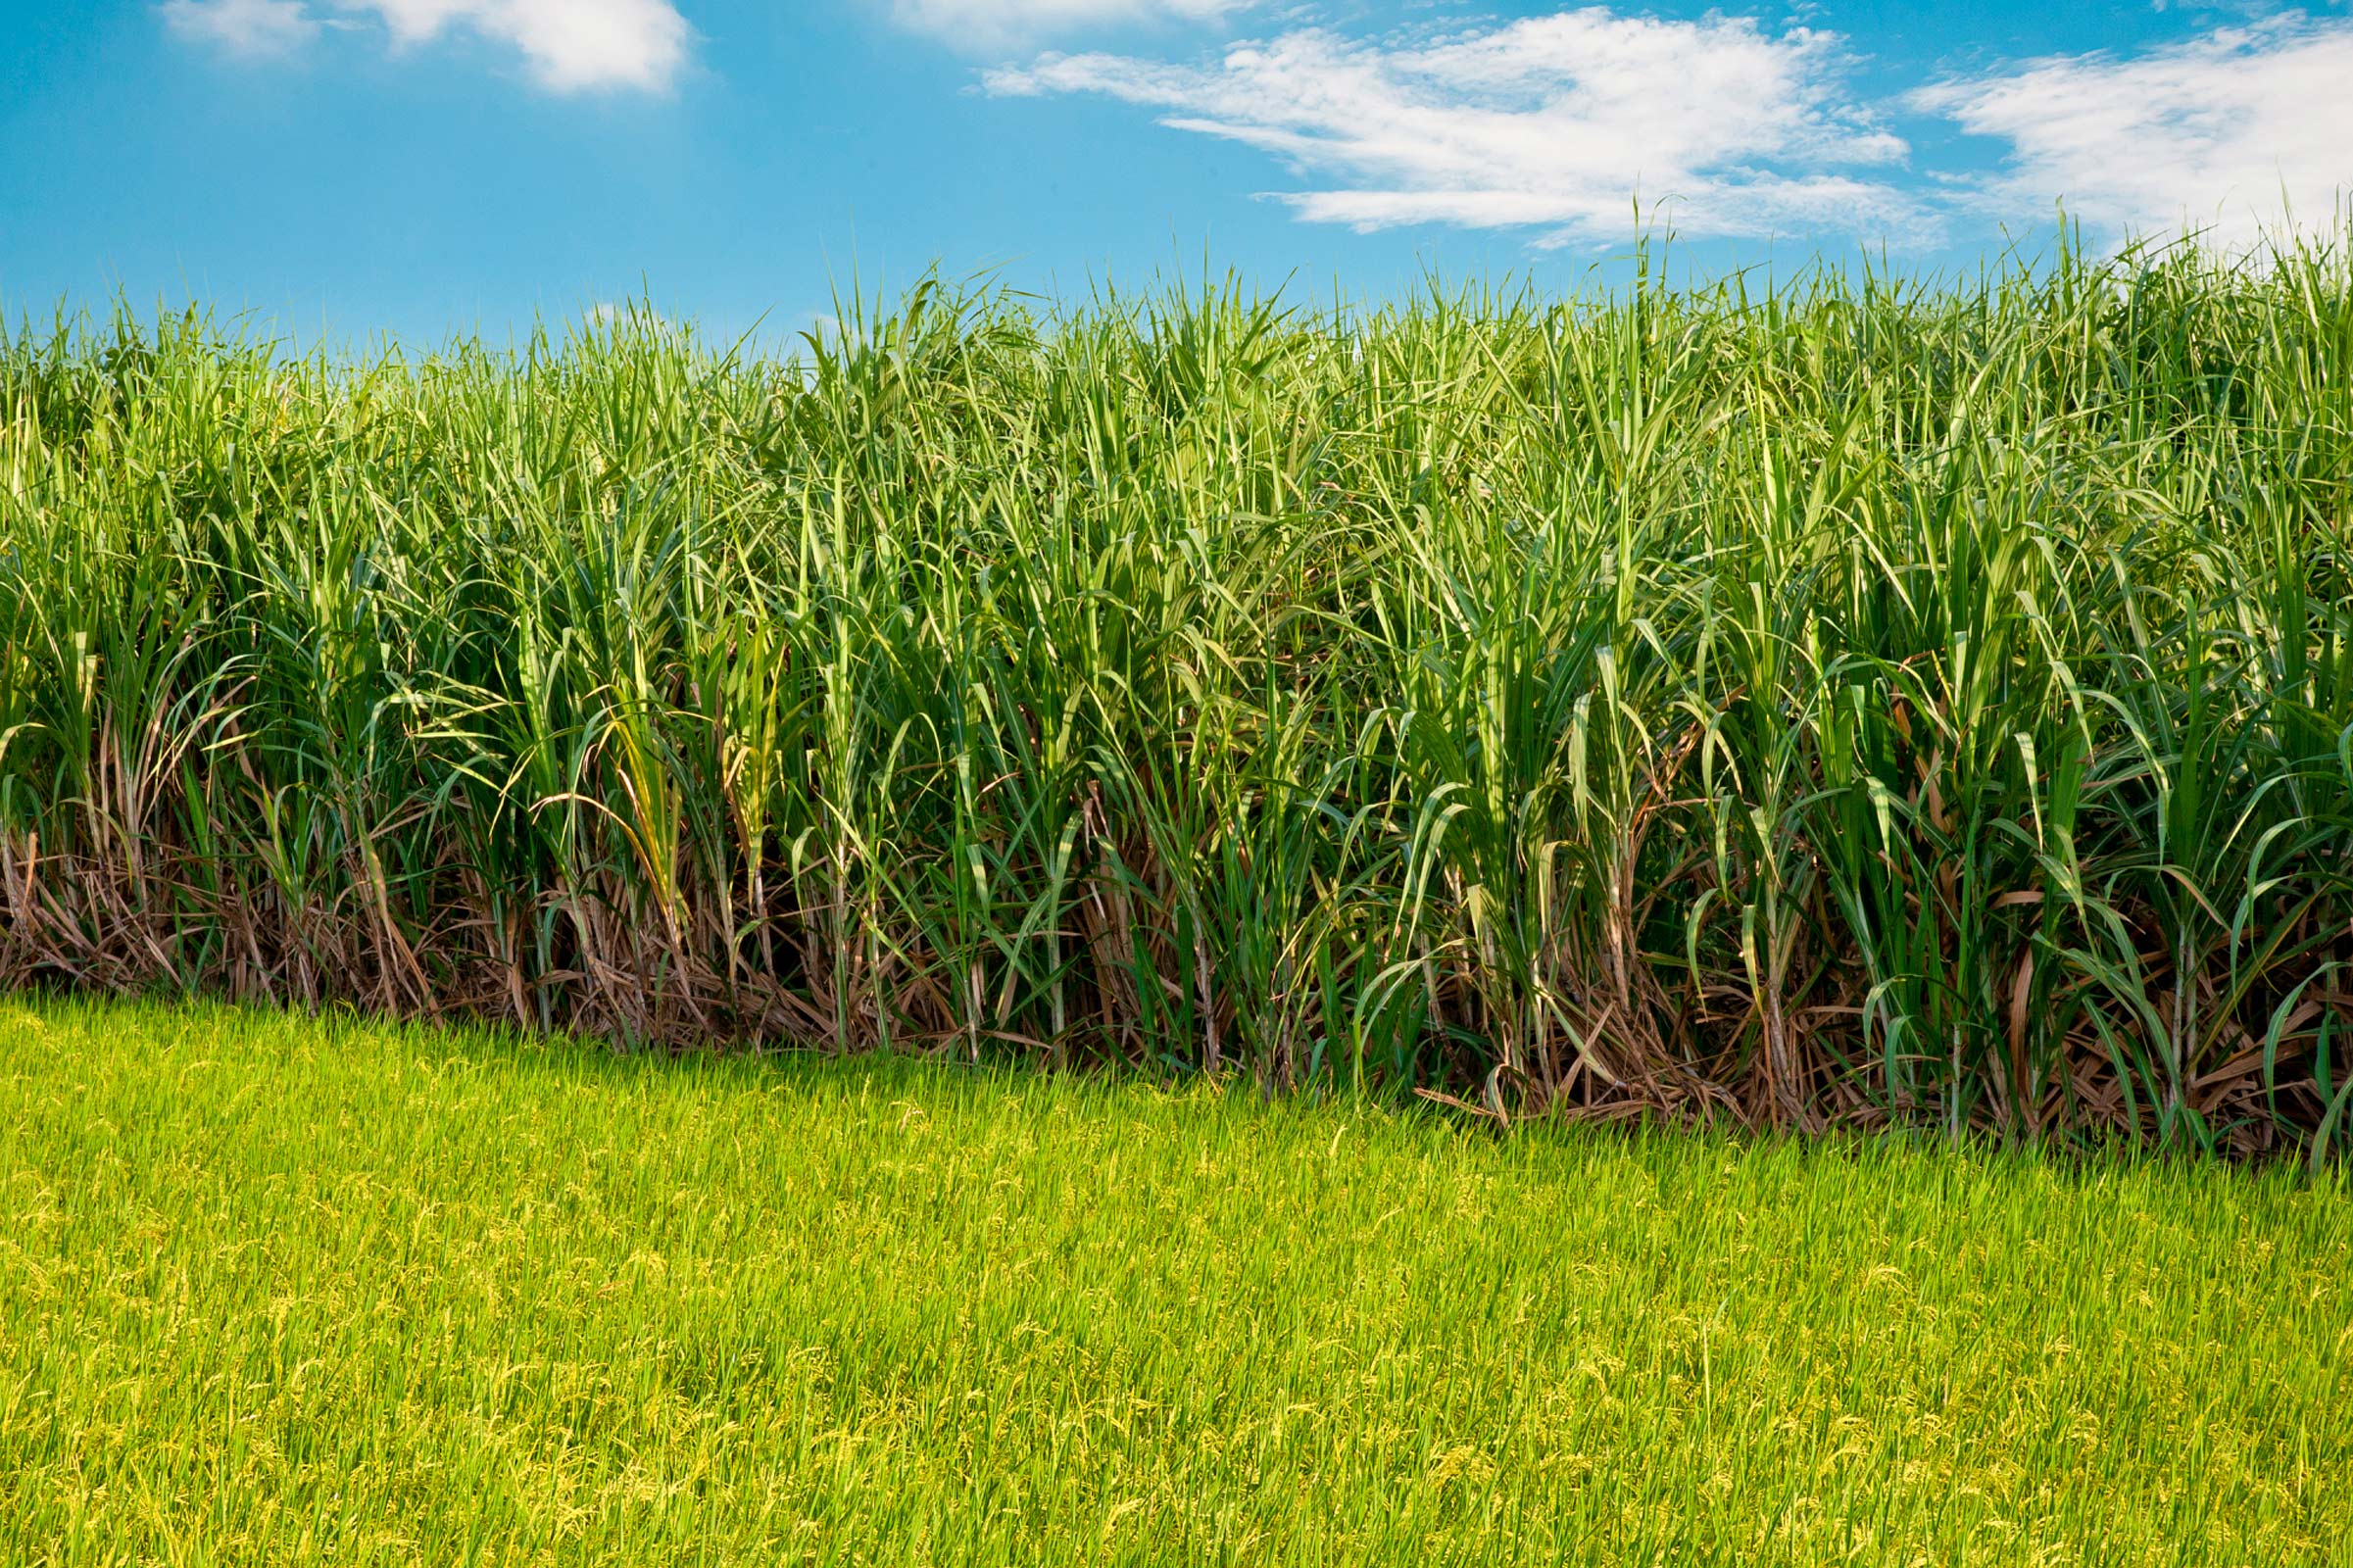 A sugarcane field